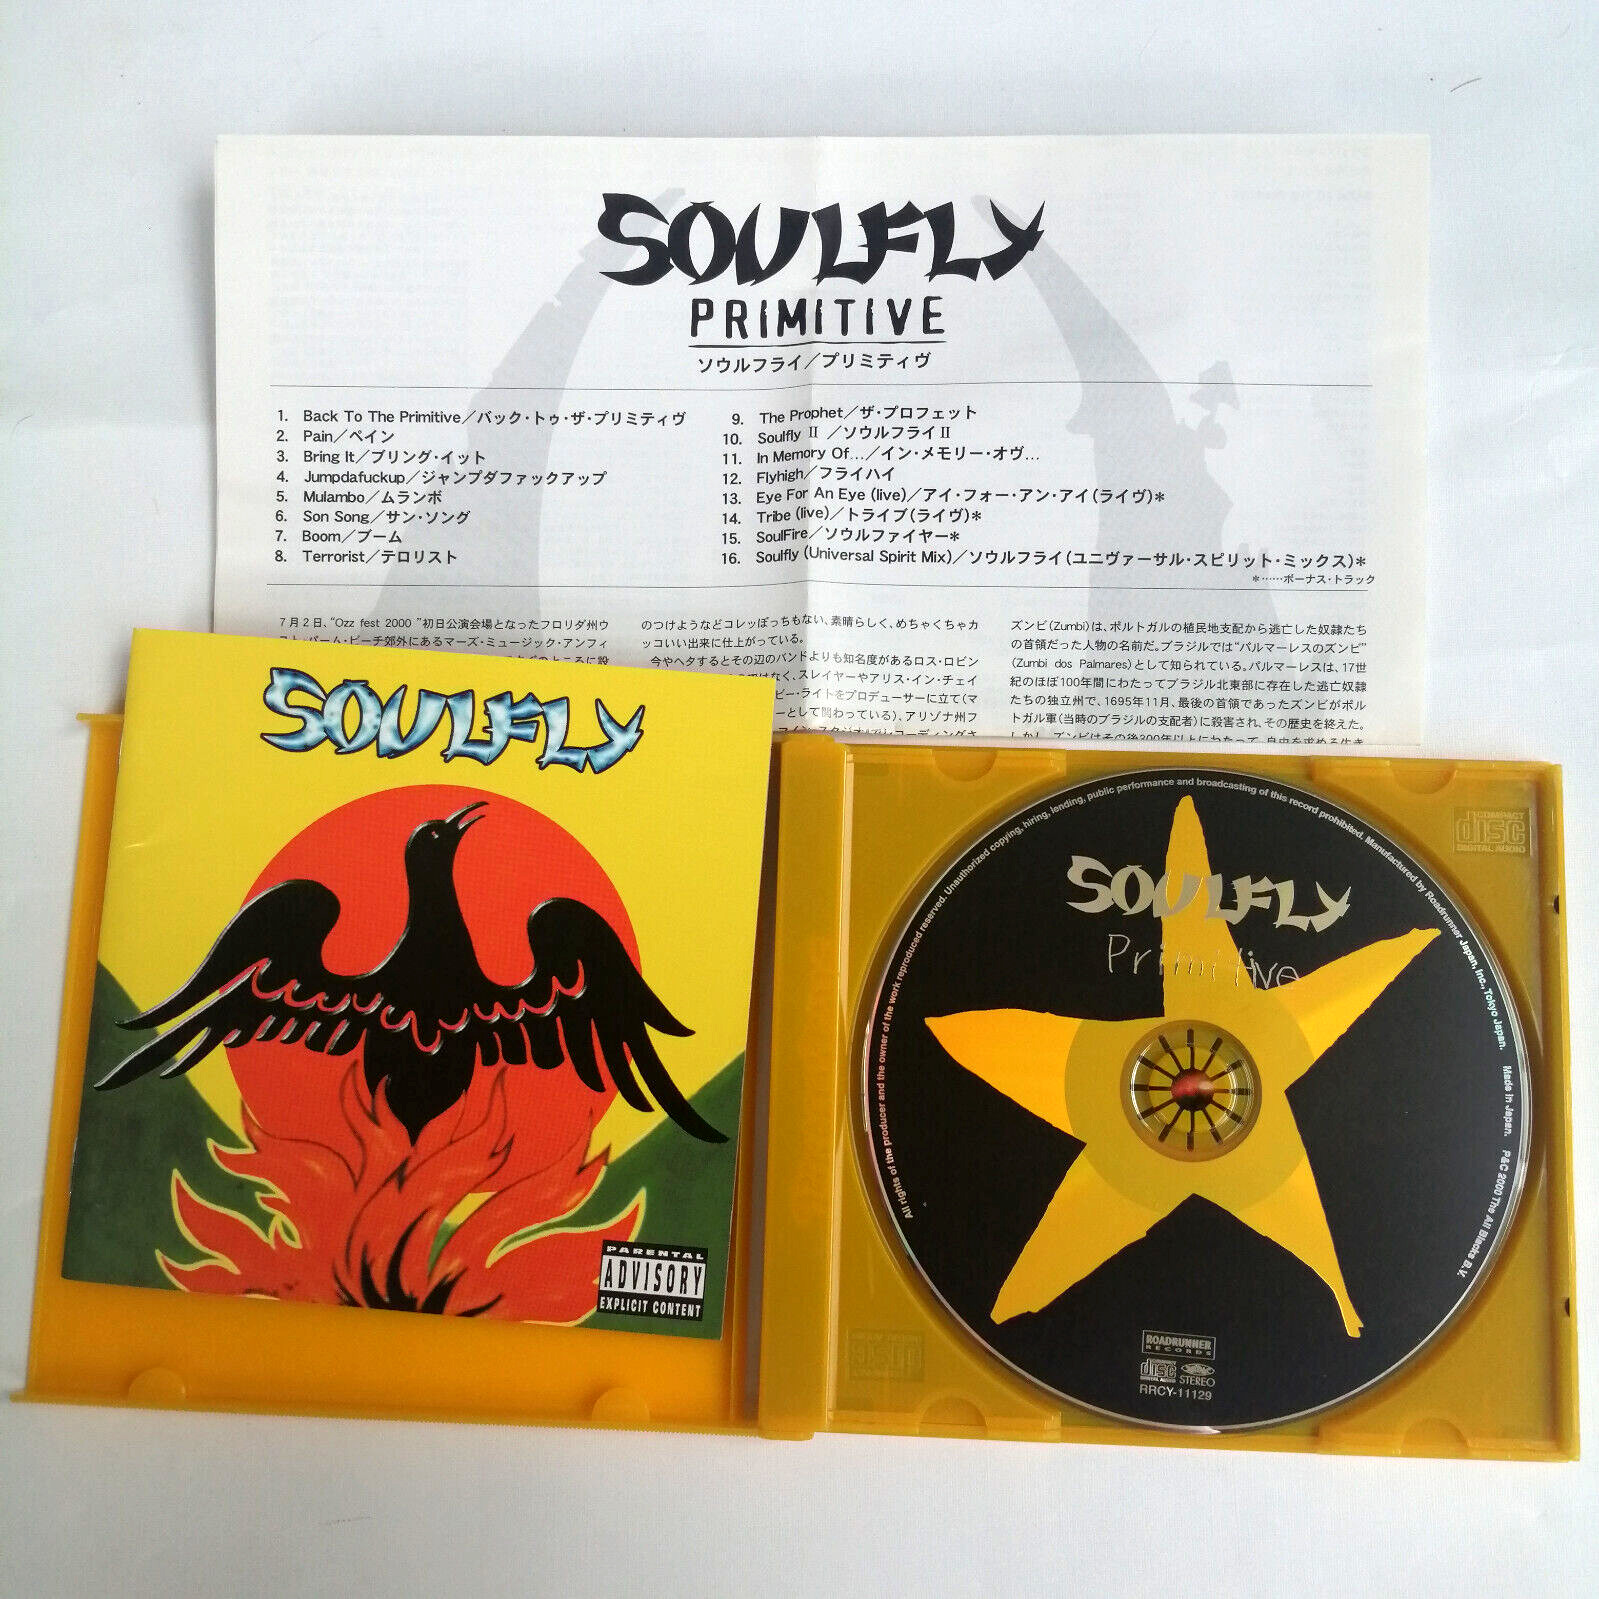 Soulfly - Primitive (2000) Music CD Japan Edition Yellow Case w/o Obi Rare